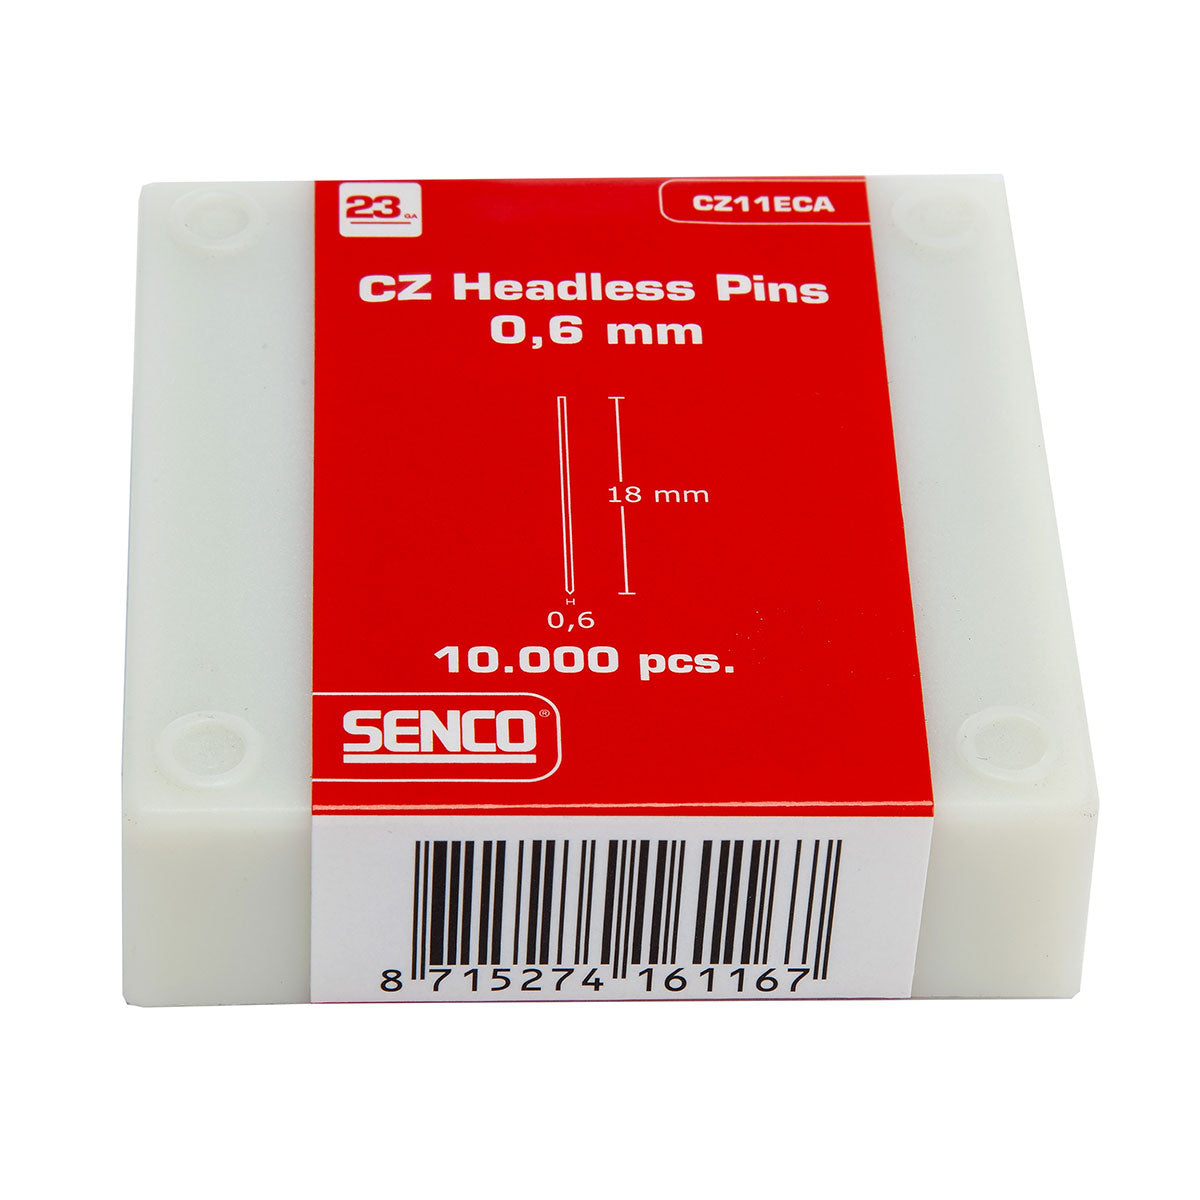 Senco 23g Headless Pins 18mm Pack of 10,000 CZ11ECA